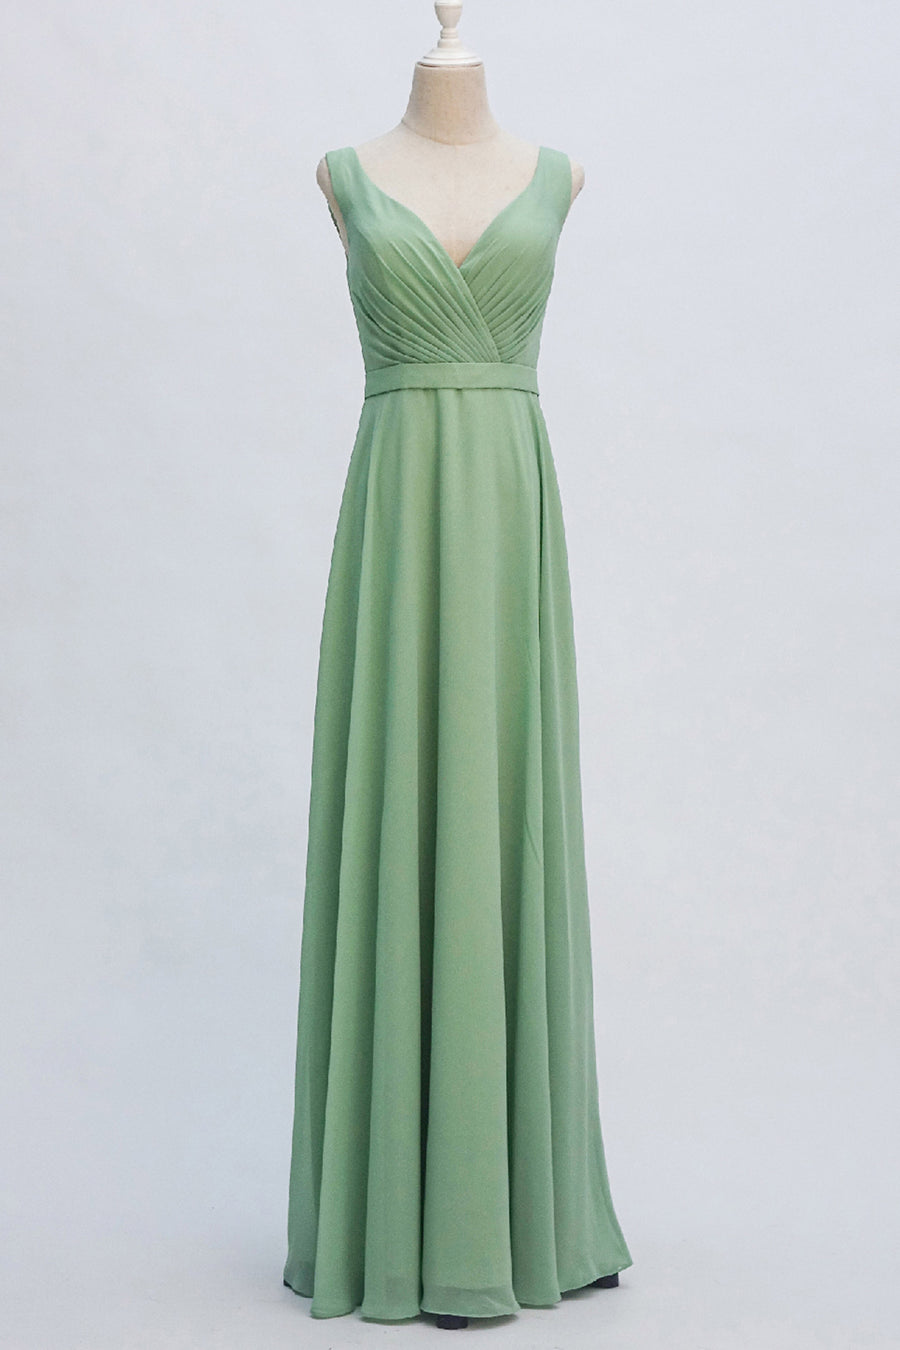 Chiffon A-Line V-Neck Sleeveless Bridesmaid Dress-B19242